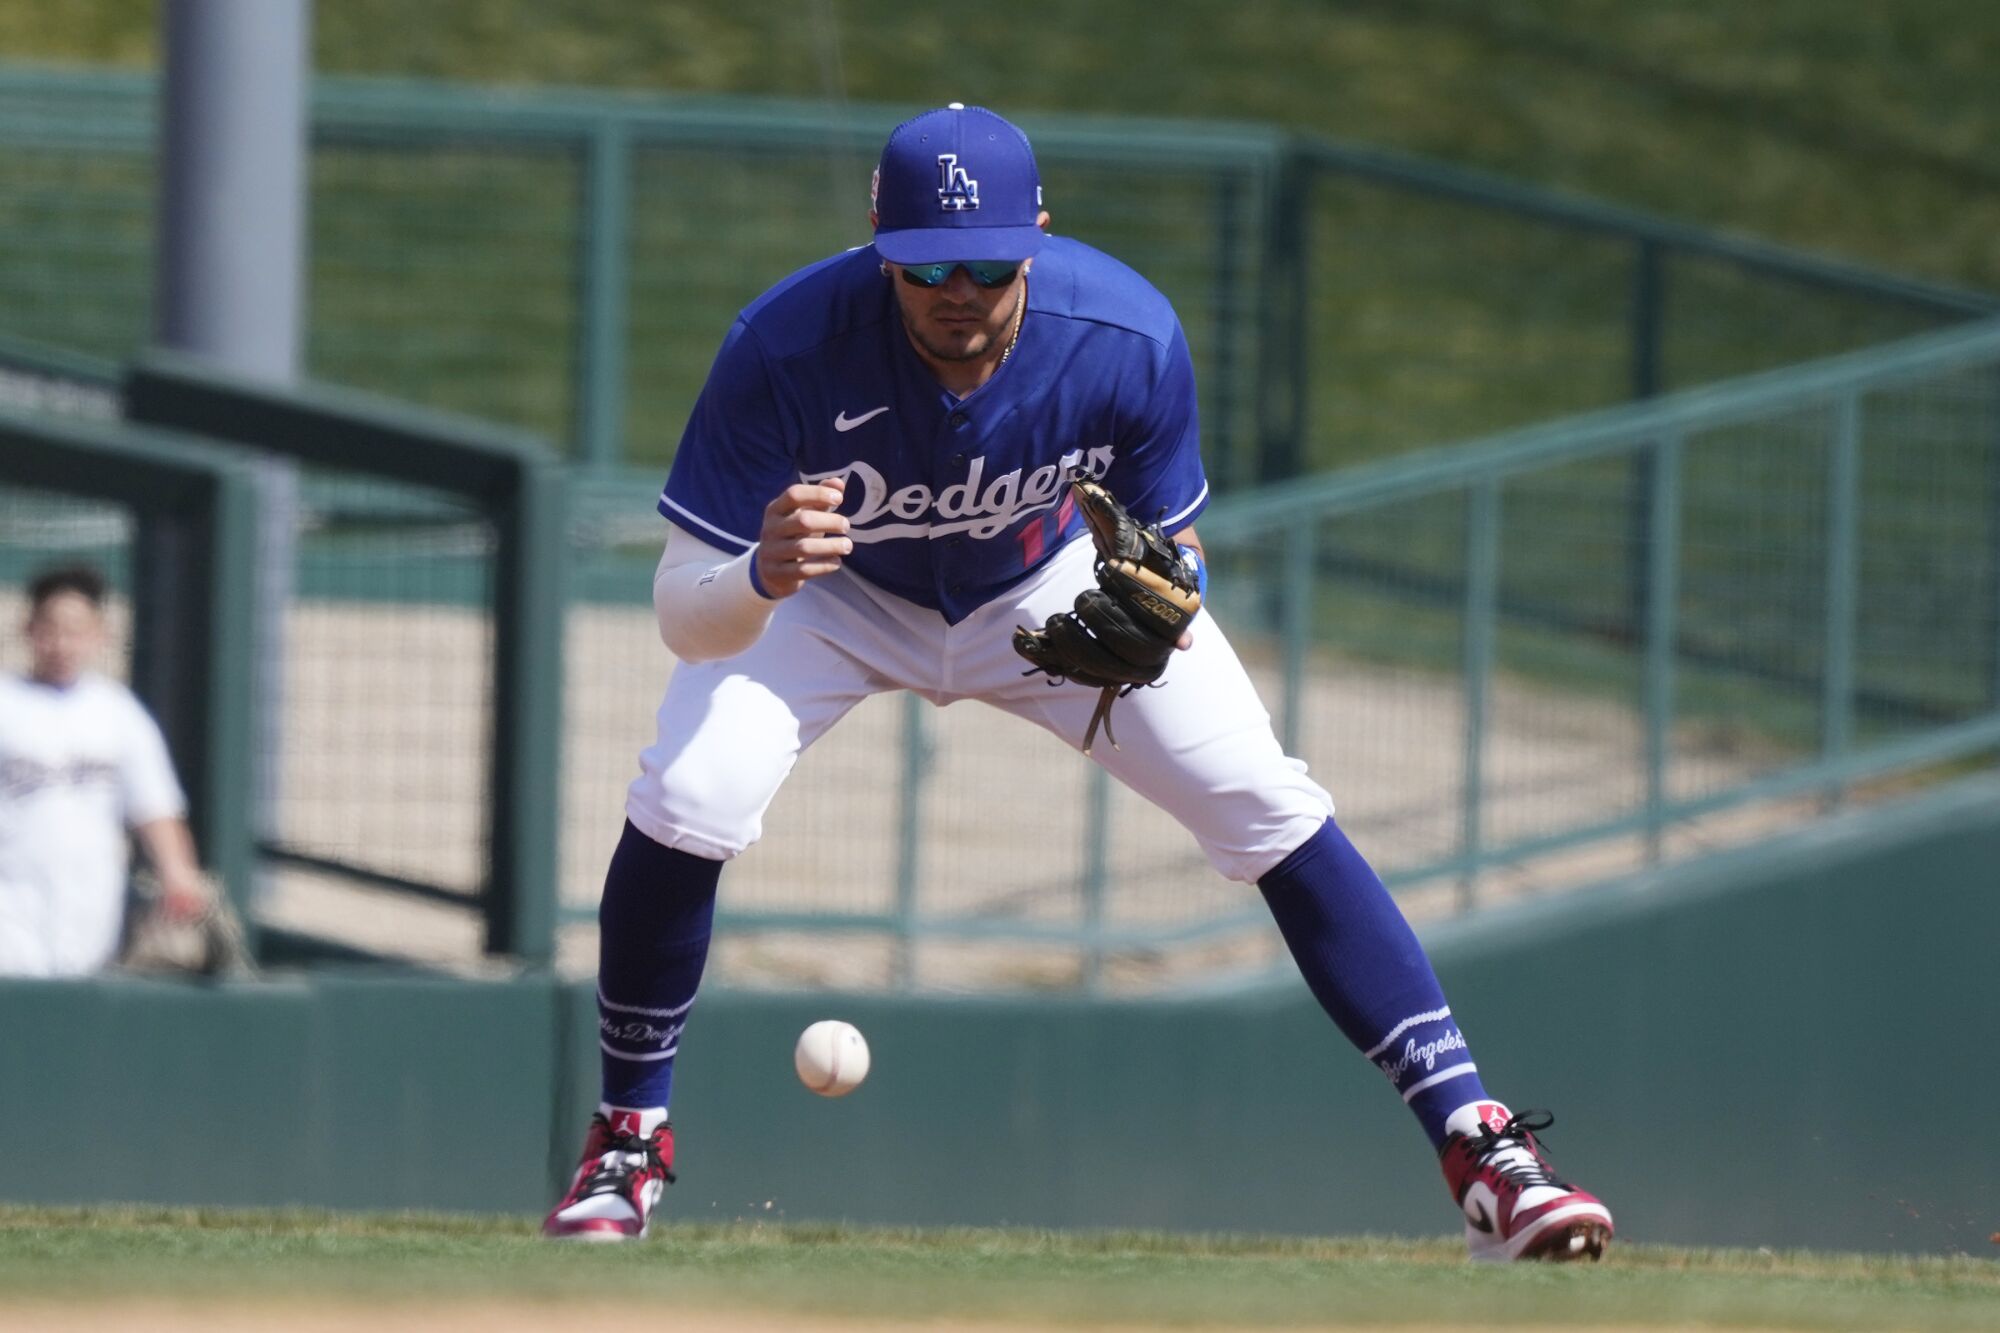 Miguel Rojas fields a ball at shortstop.